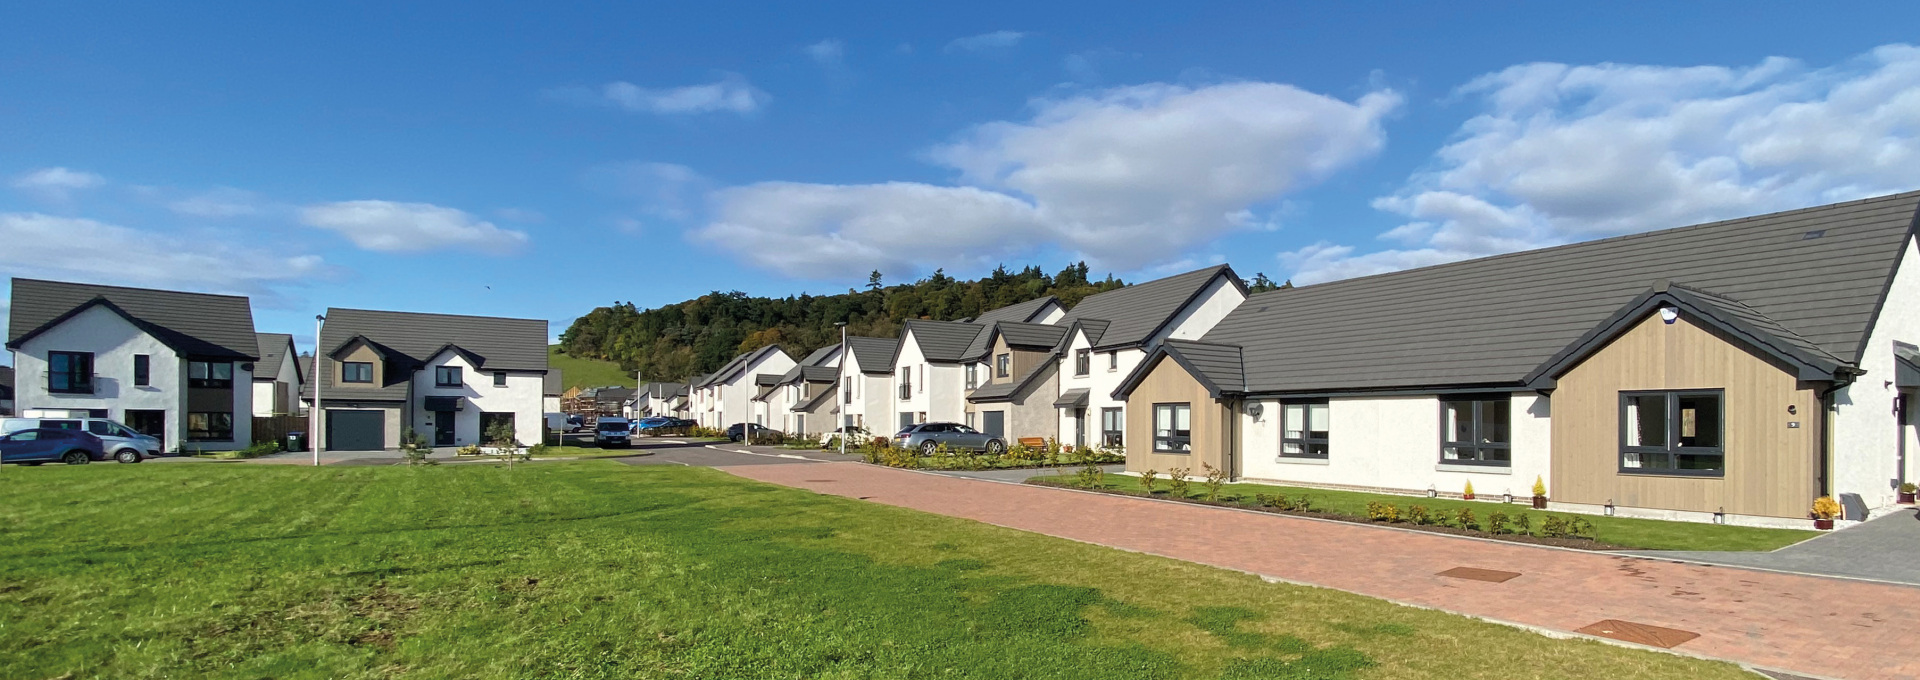 Springfield Properties New Homes In Scotland - Blairgowrie Kinloch Gardens - Blargowrie street scene bungalows Banner